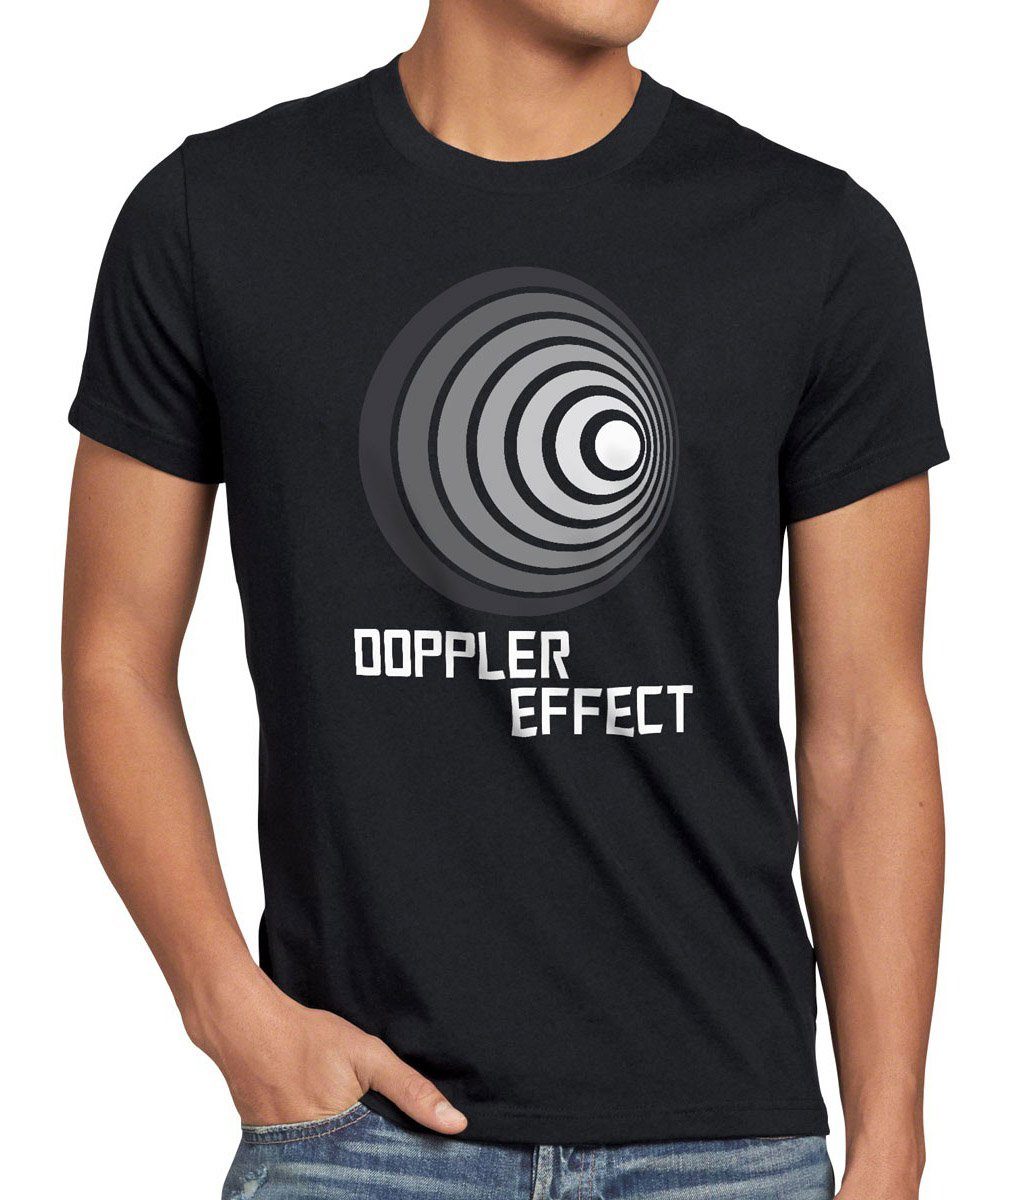 Effekt tbbt Cooper style3 Doppler Big Theory Sheldon Herren Print-Shirt Effect T-Shirt Schall Bang schwarz